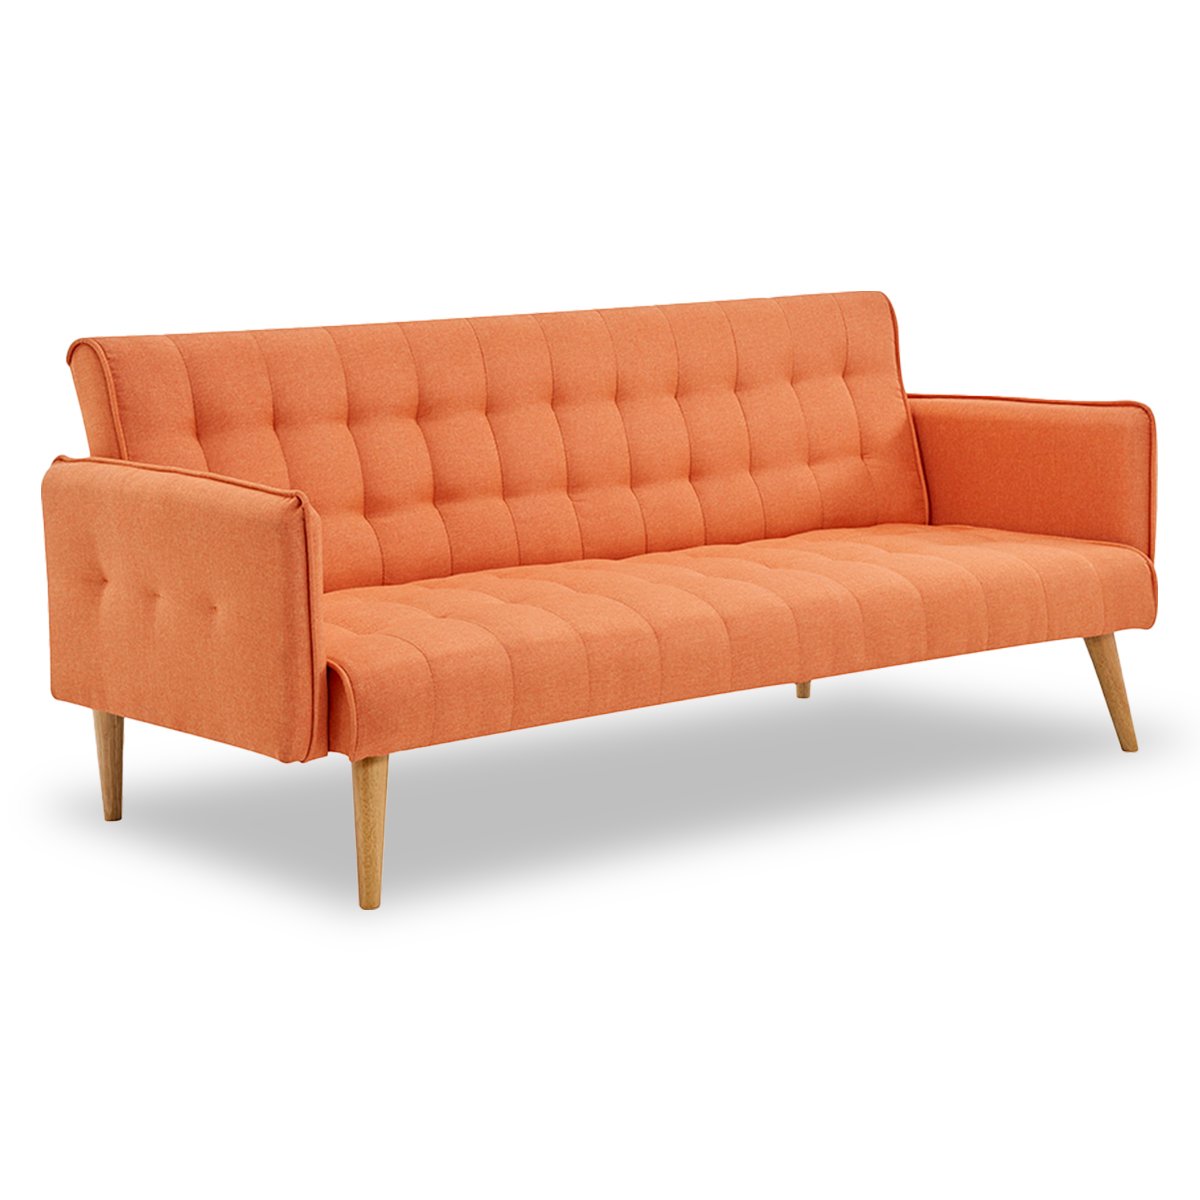 Sarantino 3-Seater Modular Linen Sofa Bed | Armrest | Orange